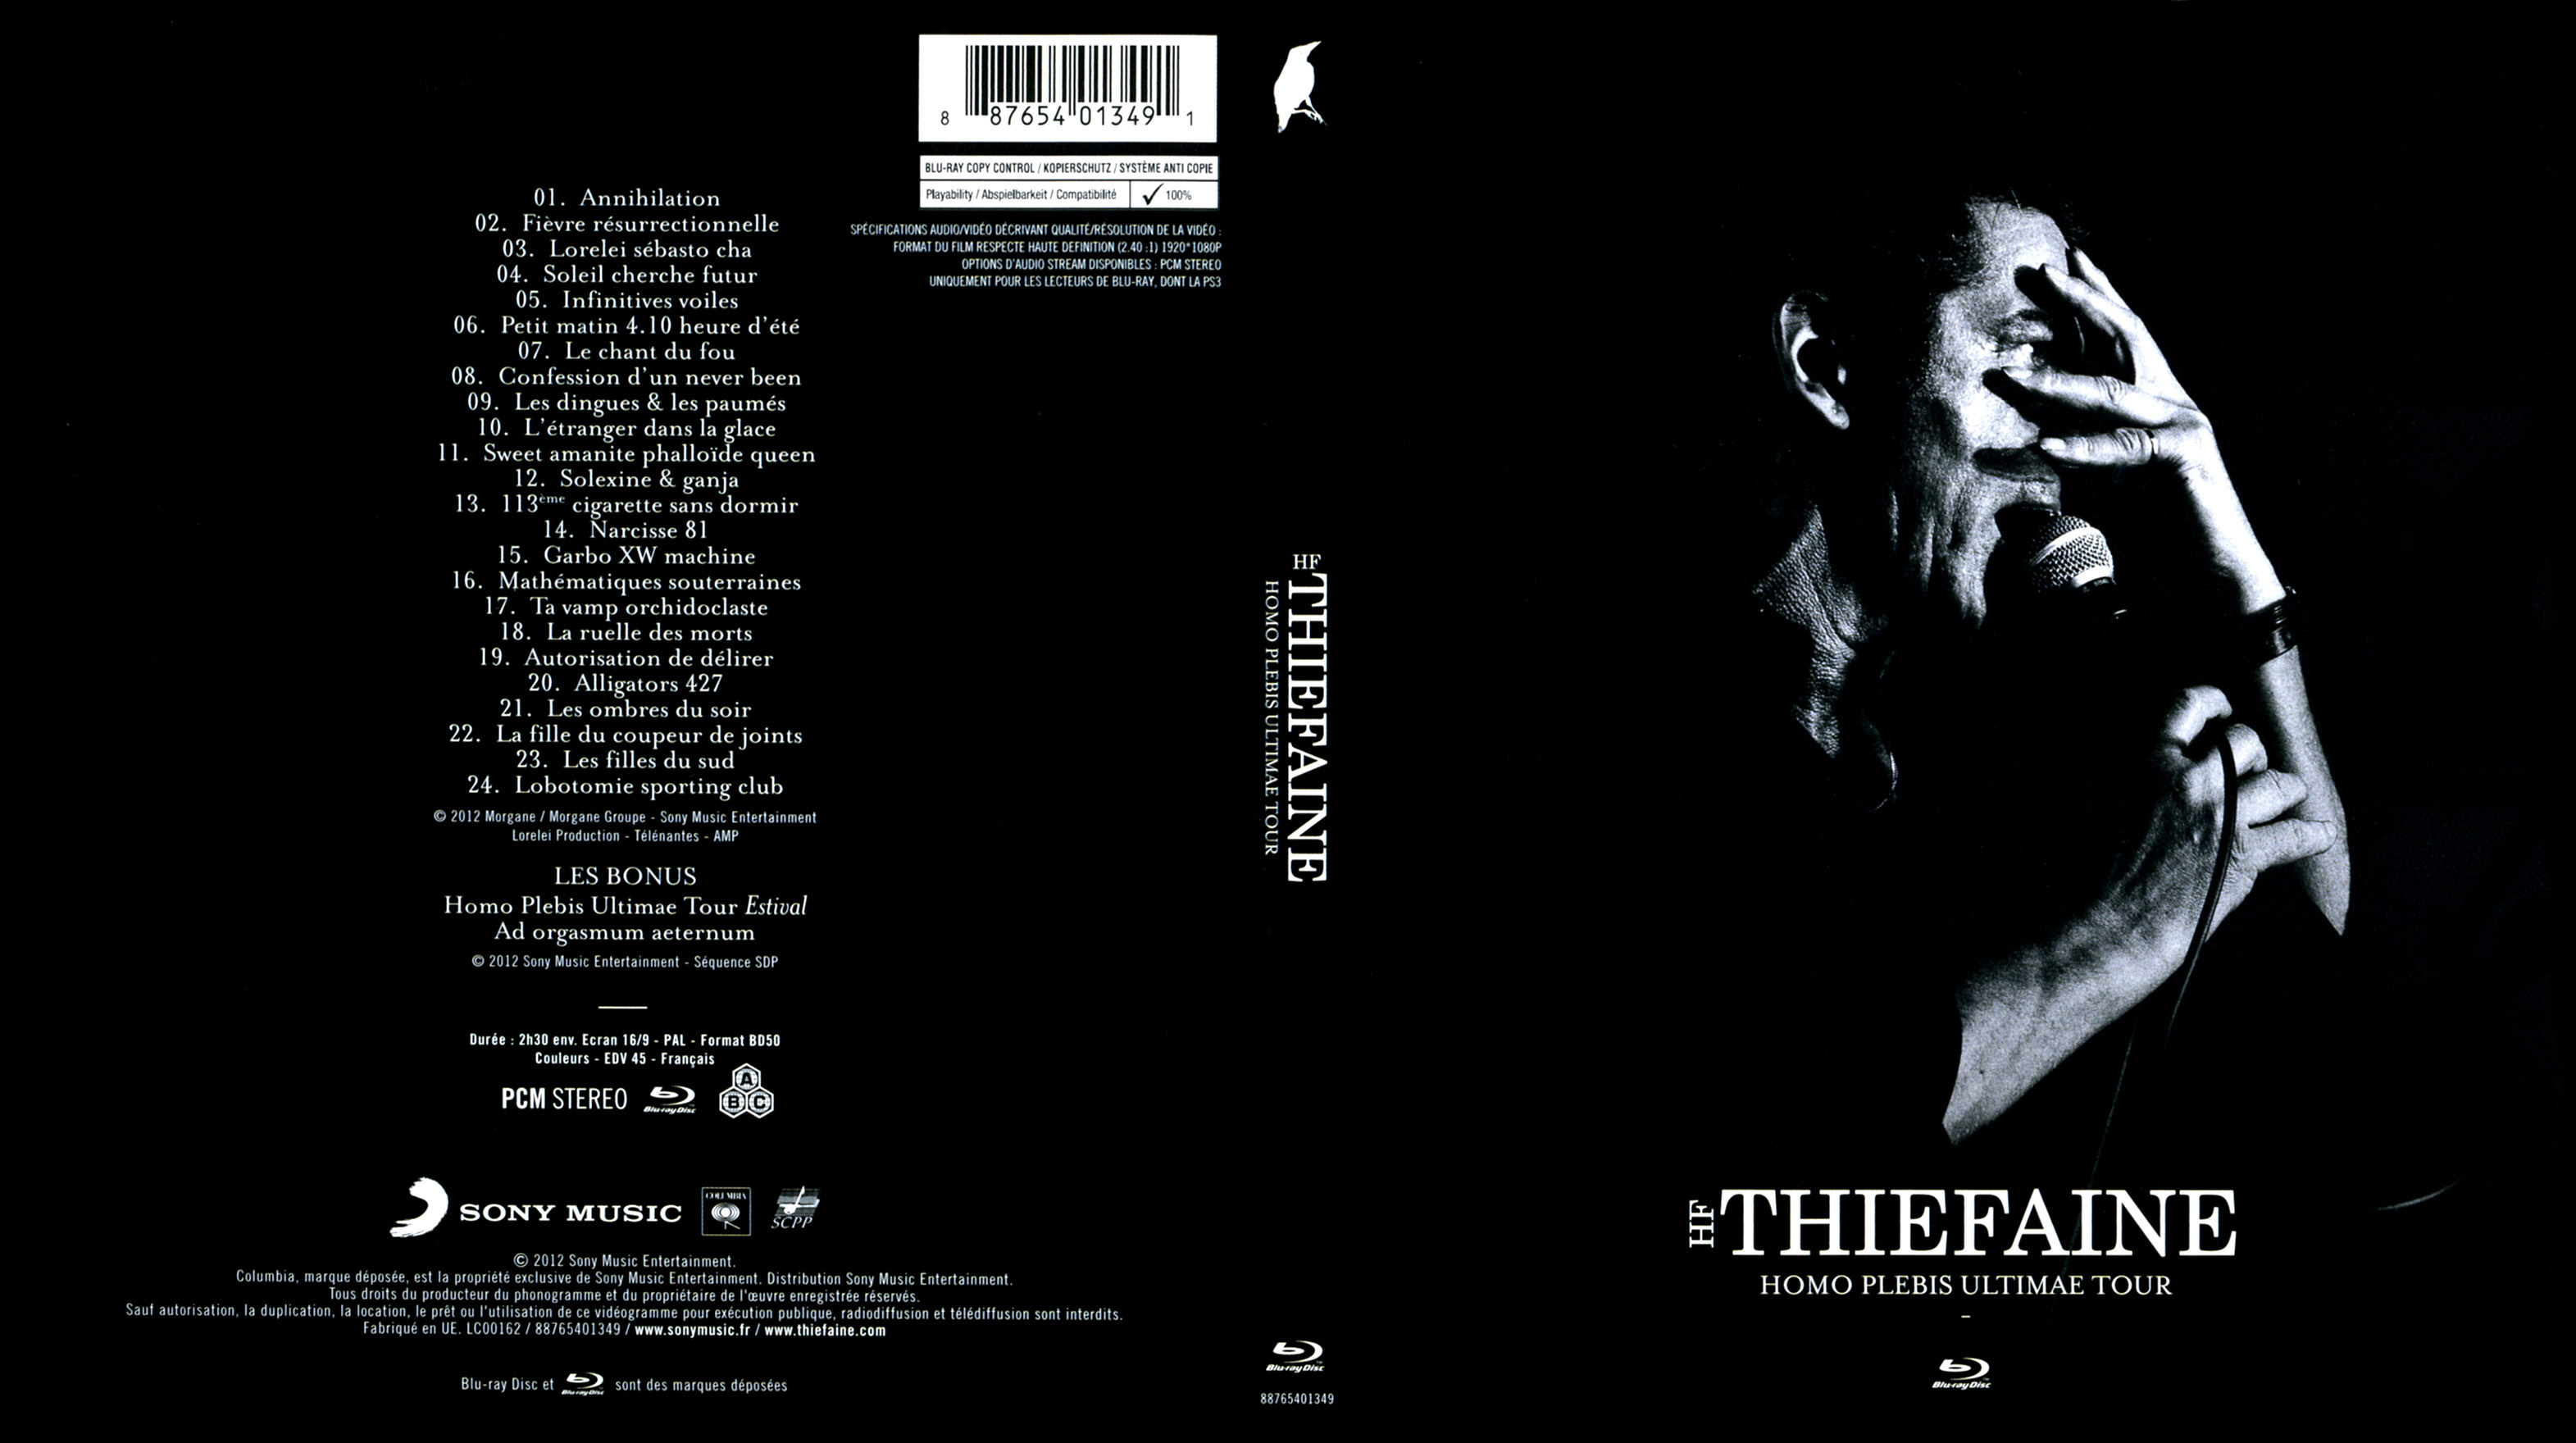 Jaquette DVD Thiefaine - Homo plebis ultimae tour (BLU-RAY)